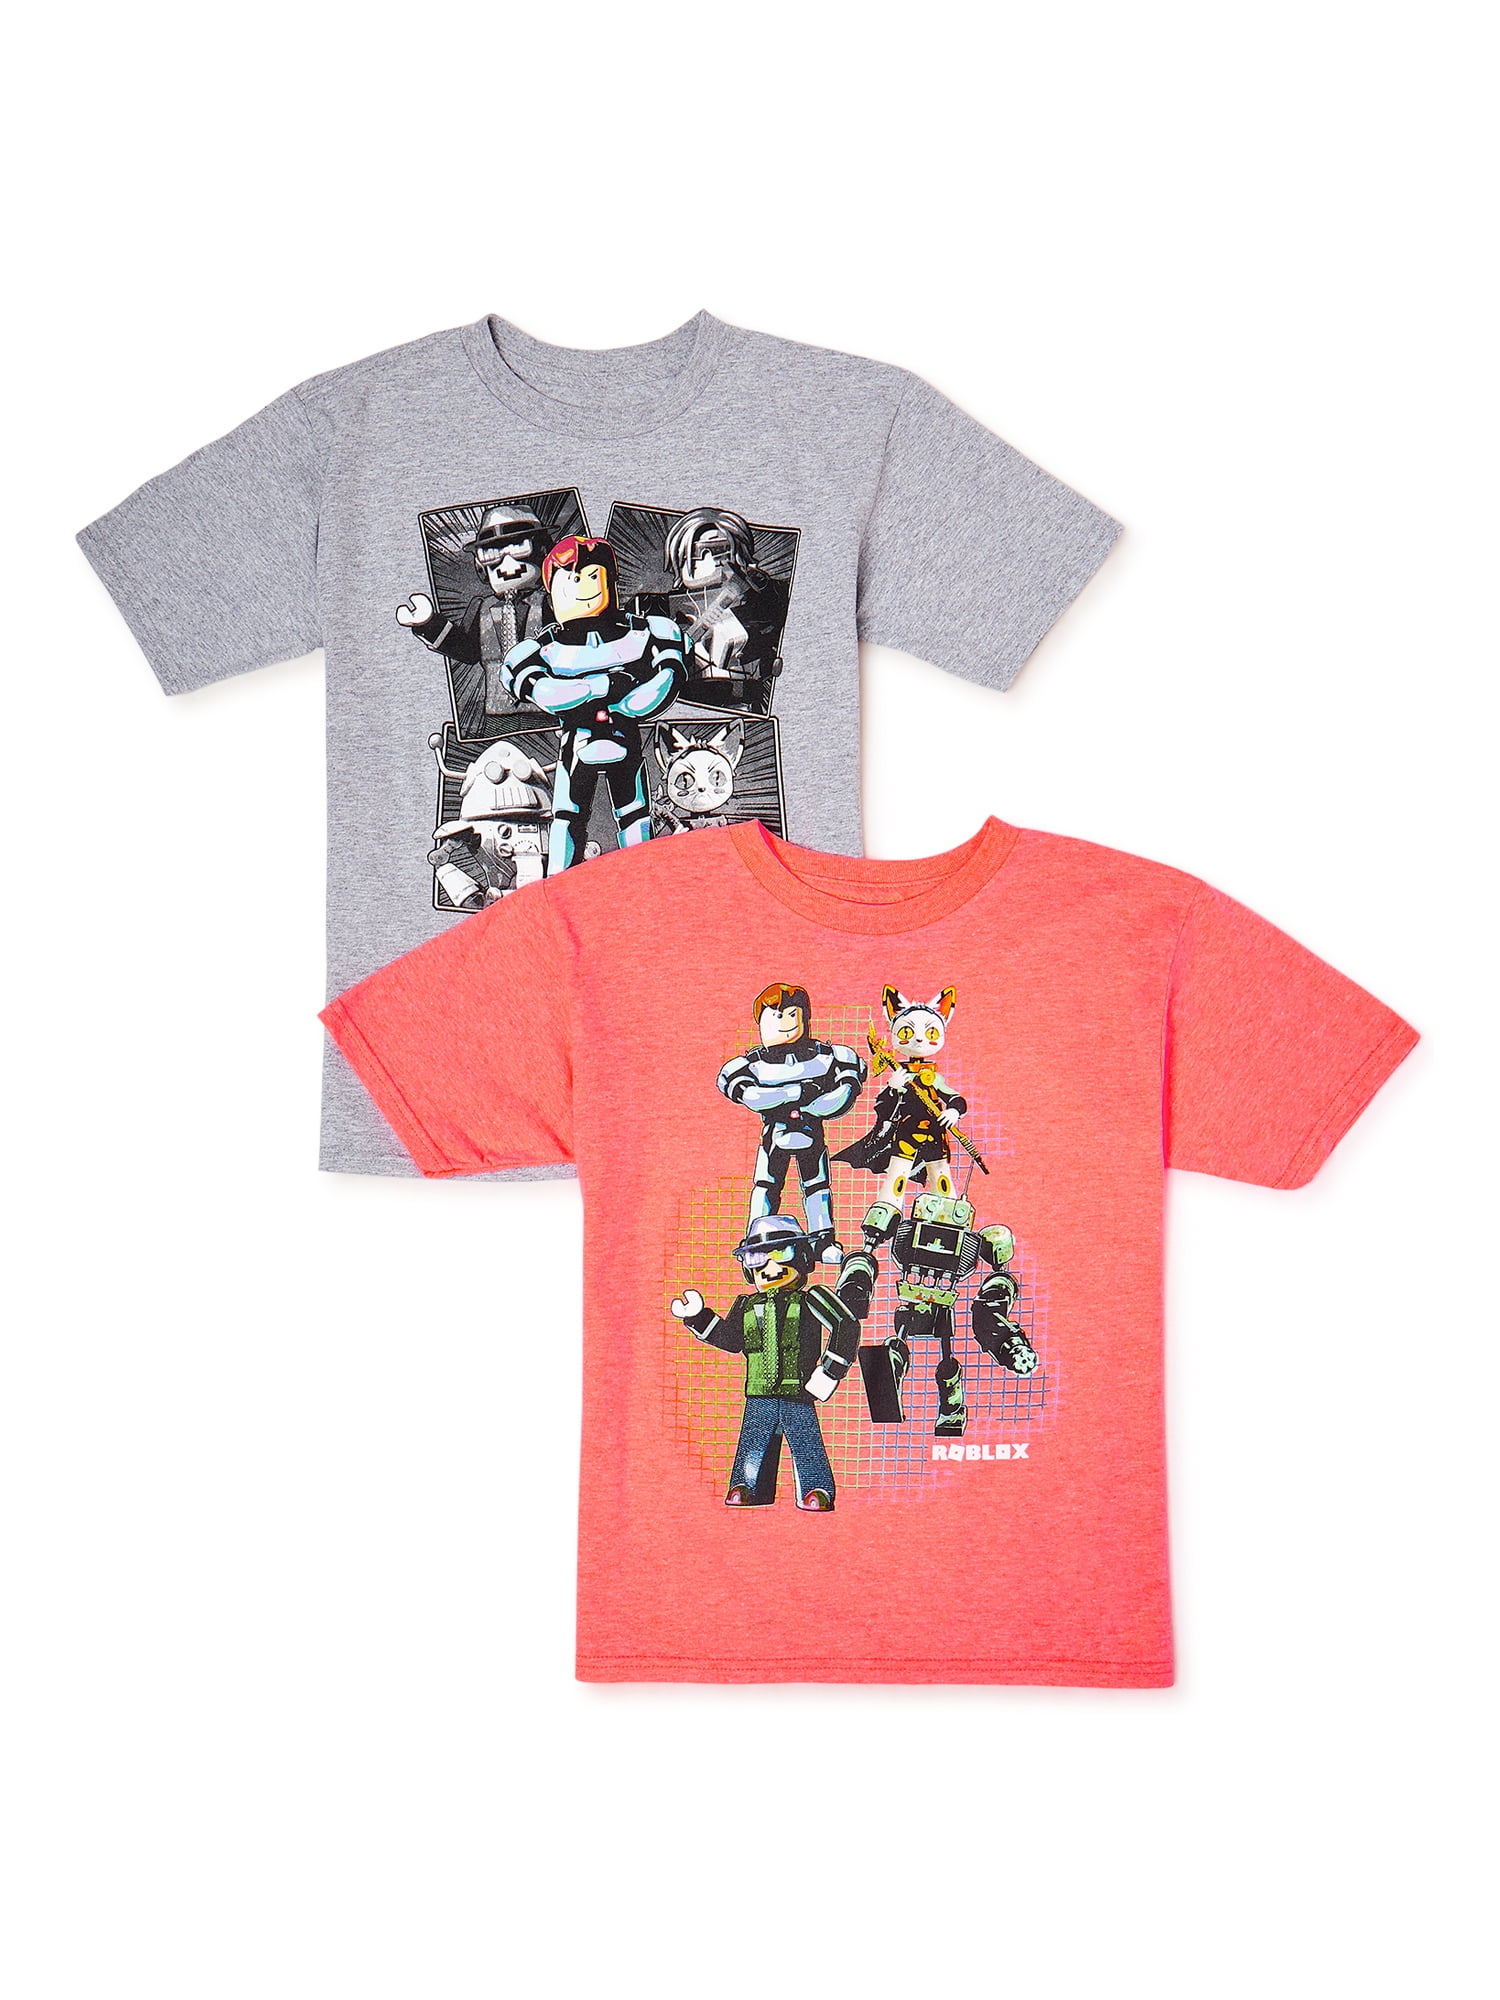 Teens Novelty Tops Fashion Youth Funny Tee Shirts Crewneck T-Shirt for Kids/Girls/Boys Roblox Shirts Boys T-Shirts